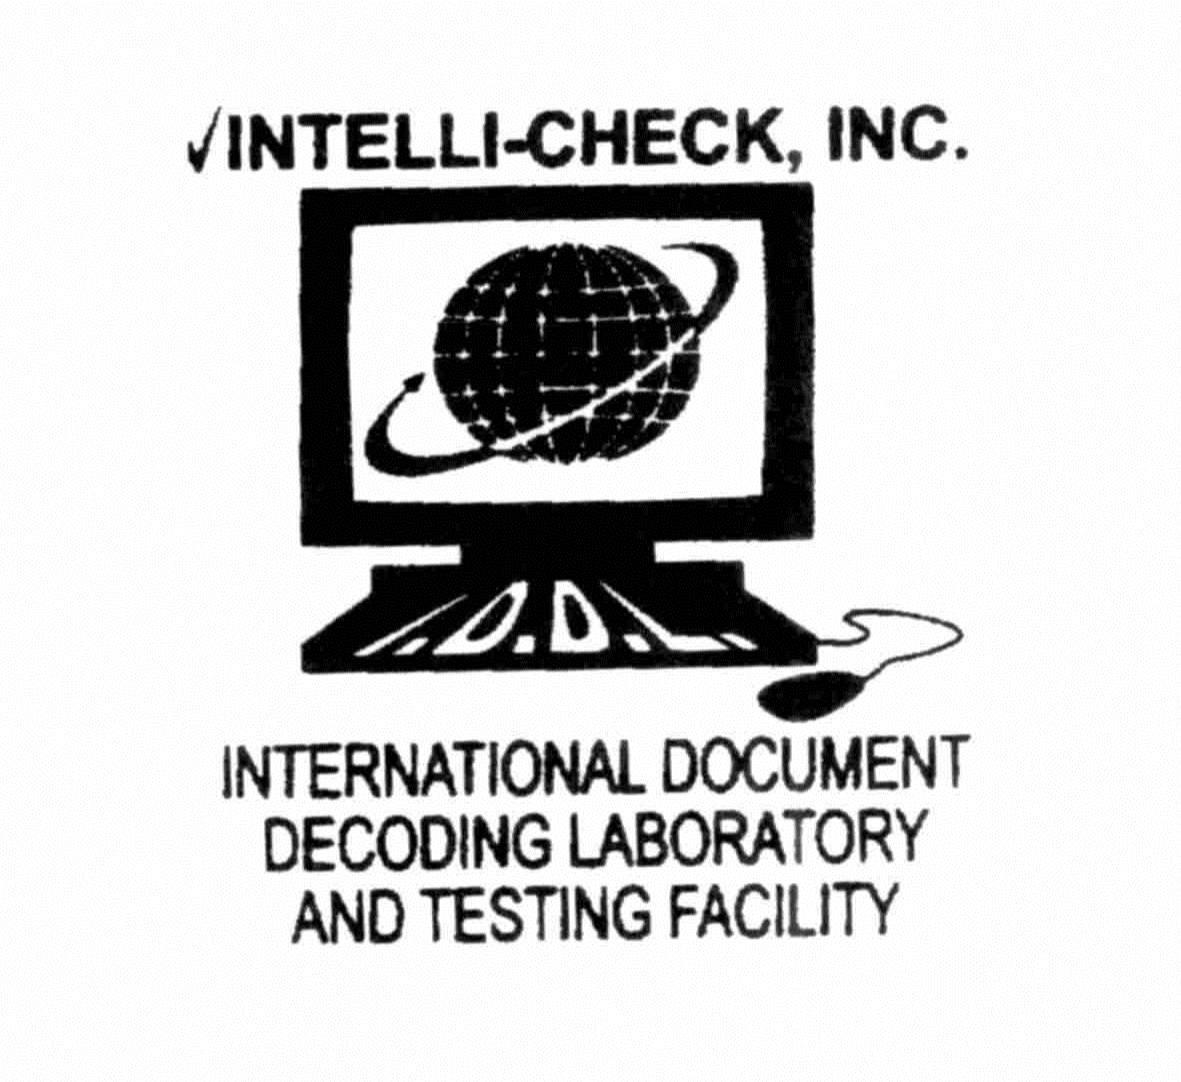  I.D.D.L. INTERNATIONAL DOCUMENT DECODING LABORATORY AND TESTING FACILITY